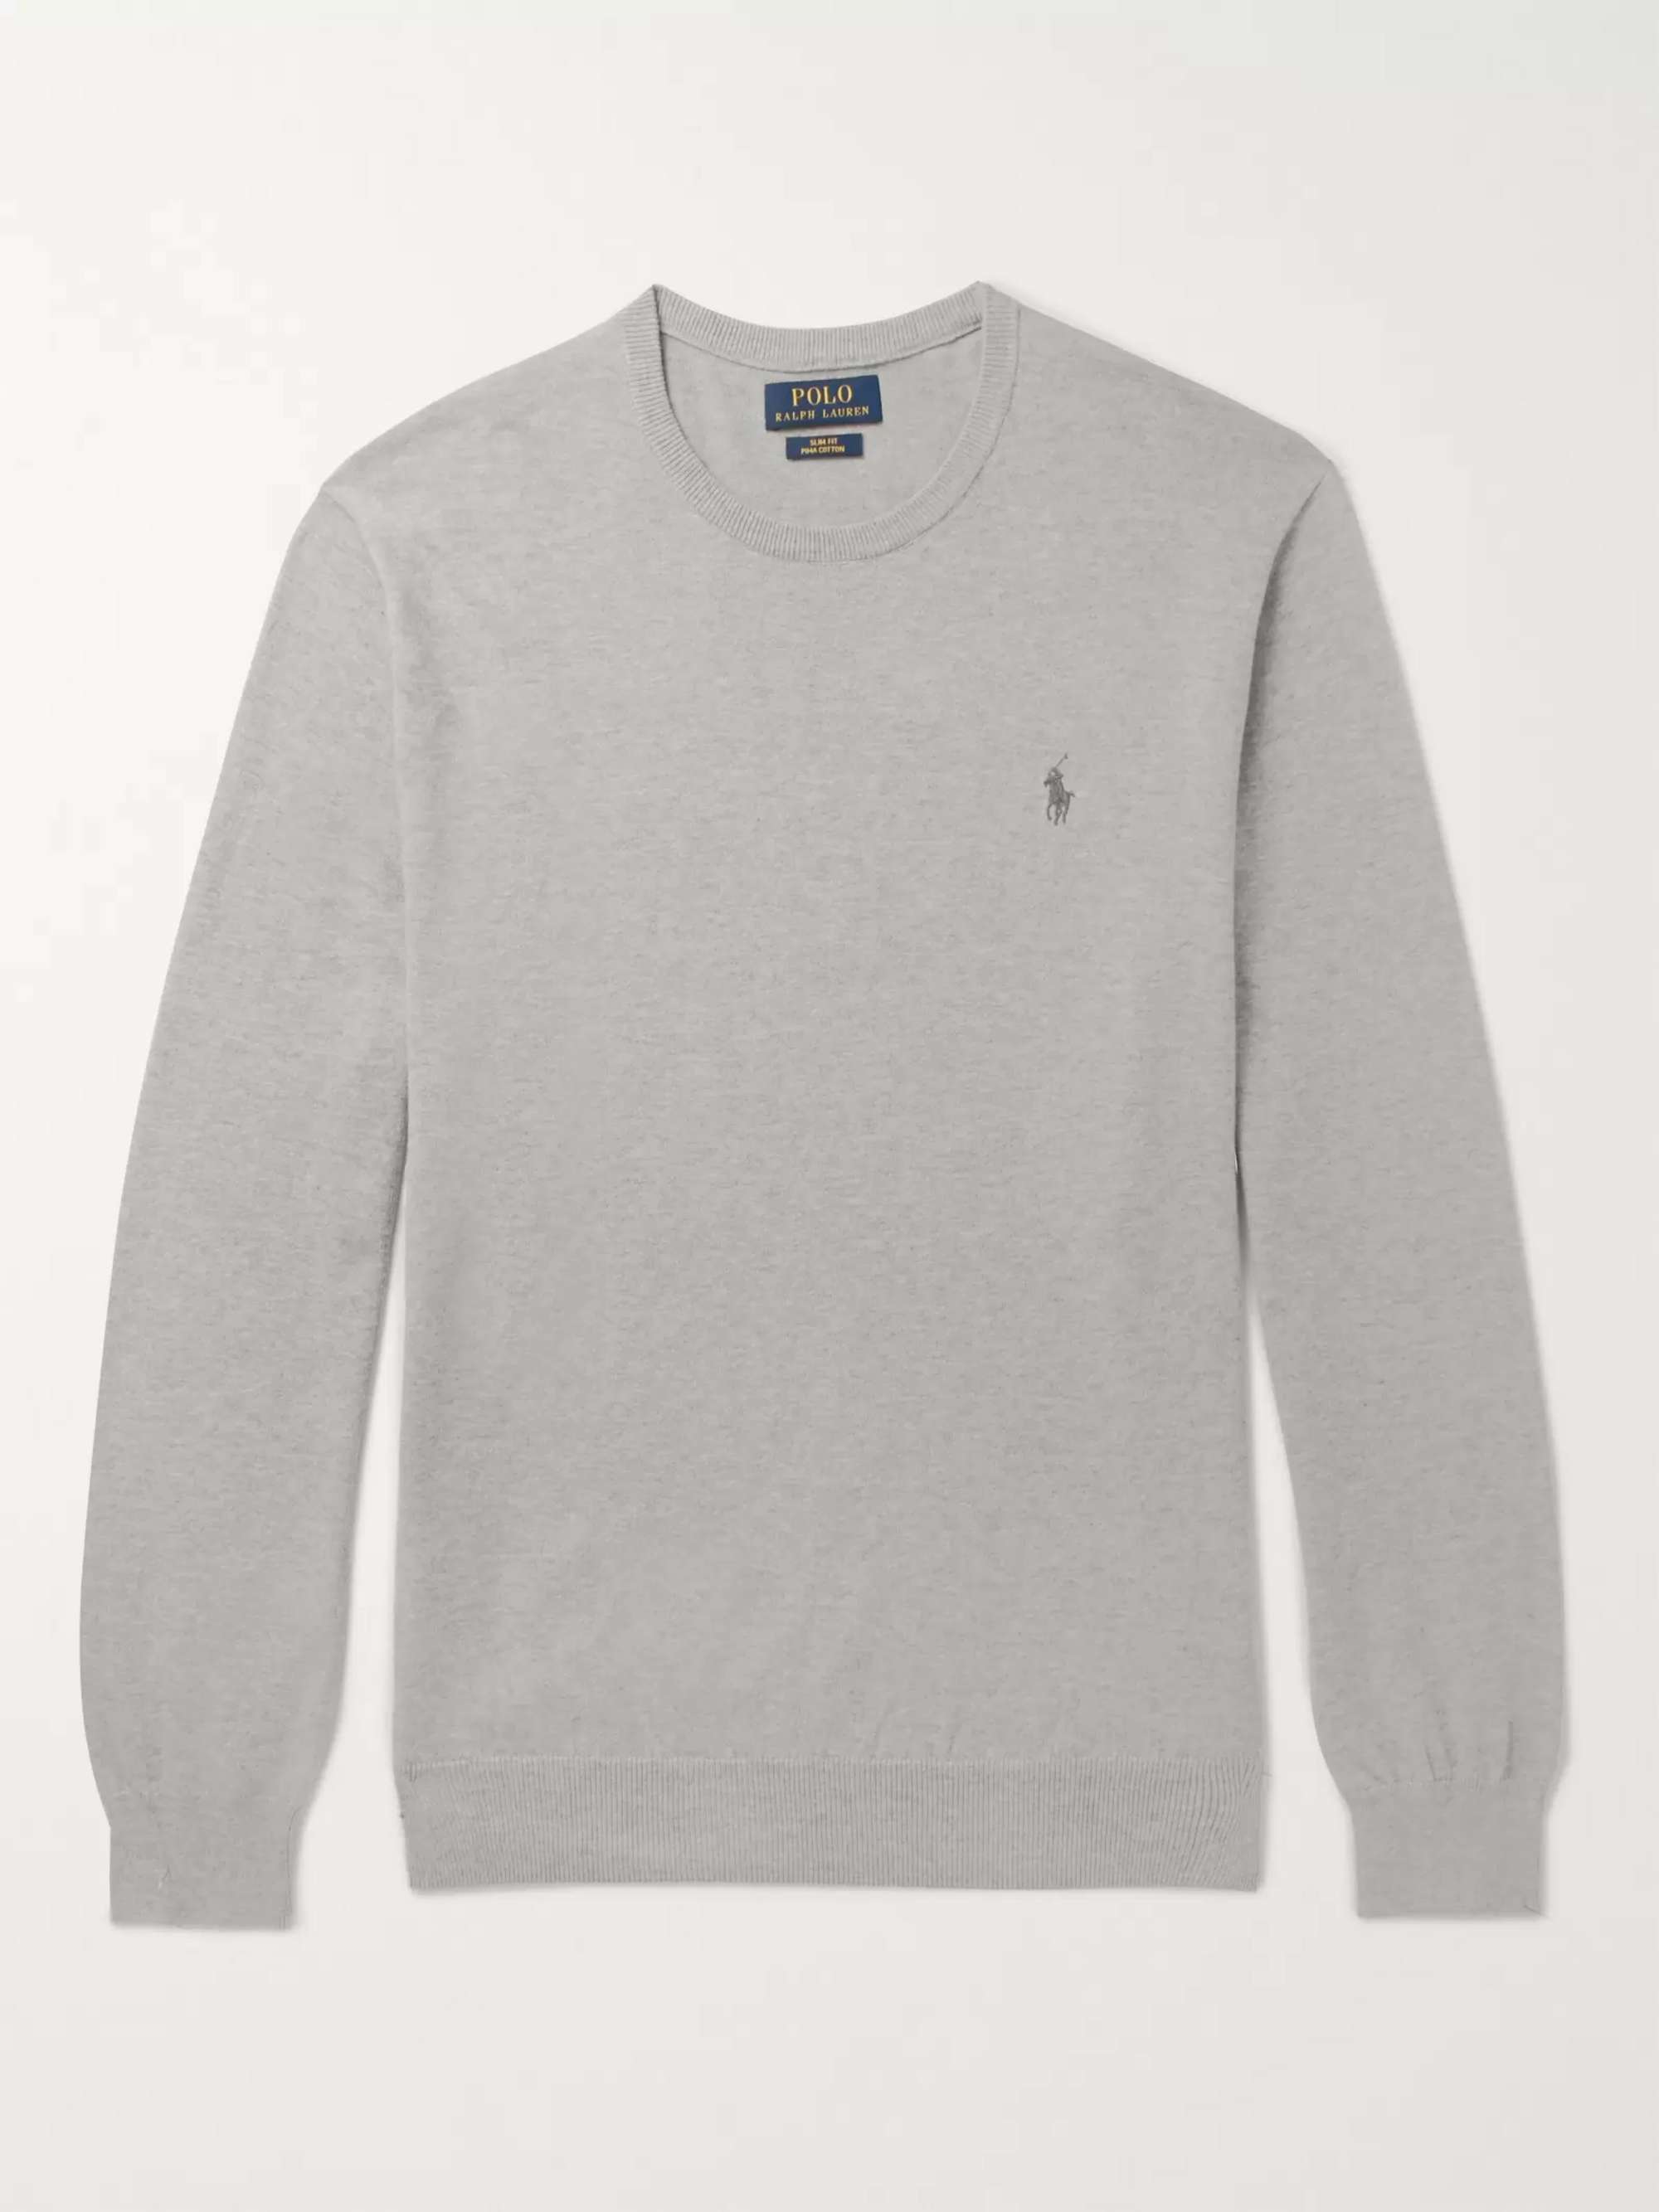 Gray Slim-Fit Pima Cotton Sweater | POLO RALPH LAUREN | MR PORTER